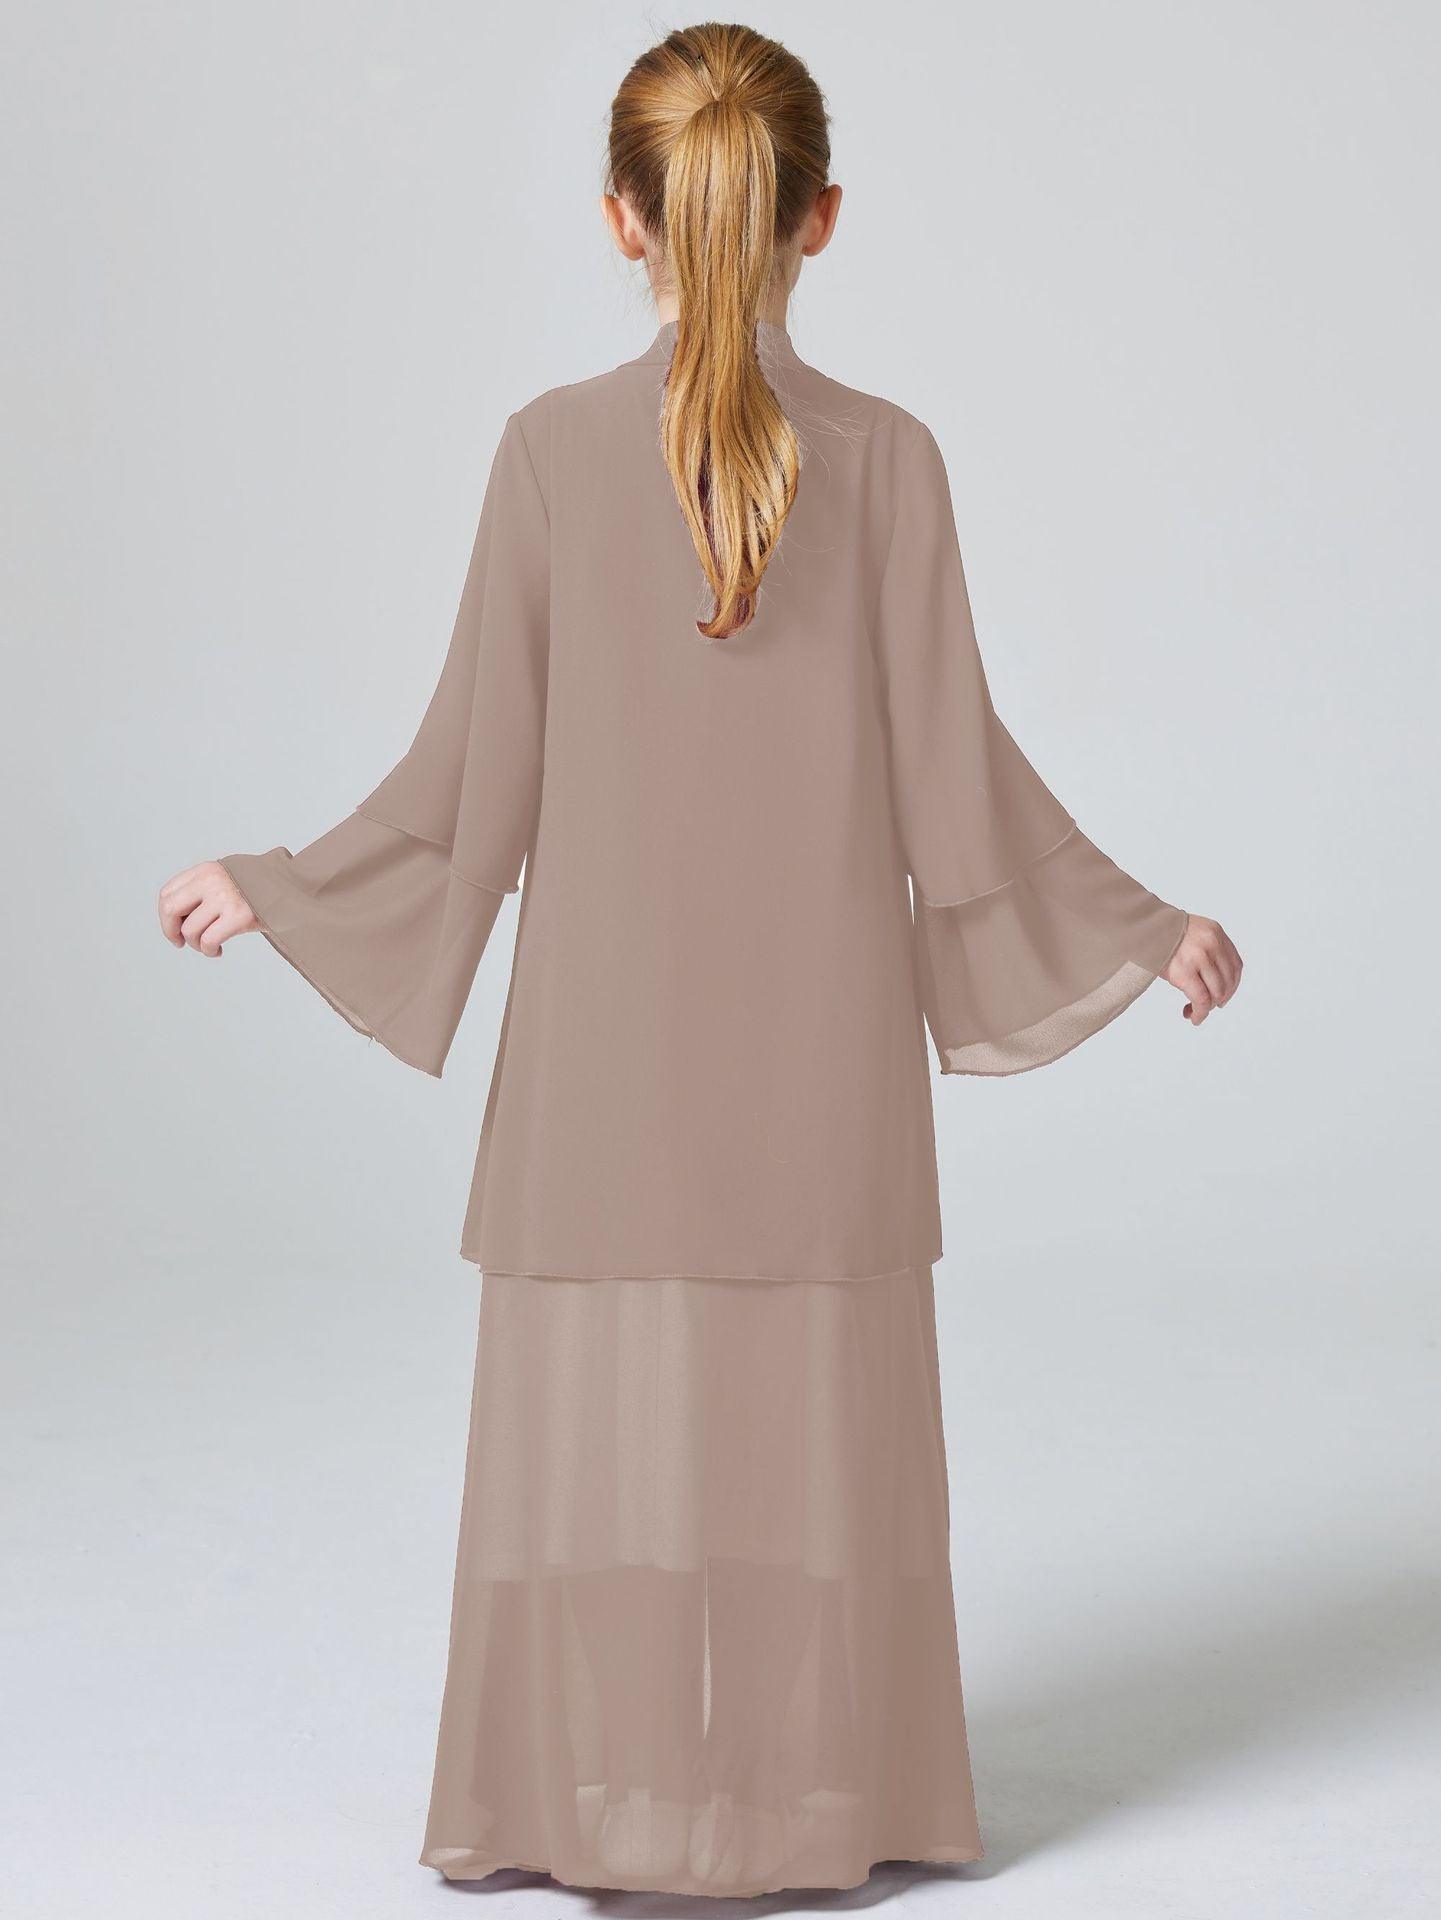 MKG007 Two Layers Chiffon Girls Open Abaya - Mariam's Collection